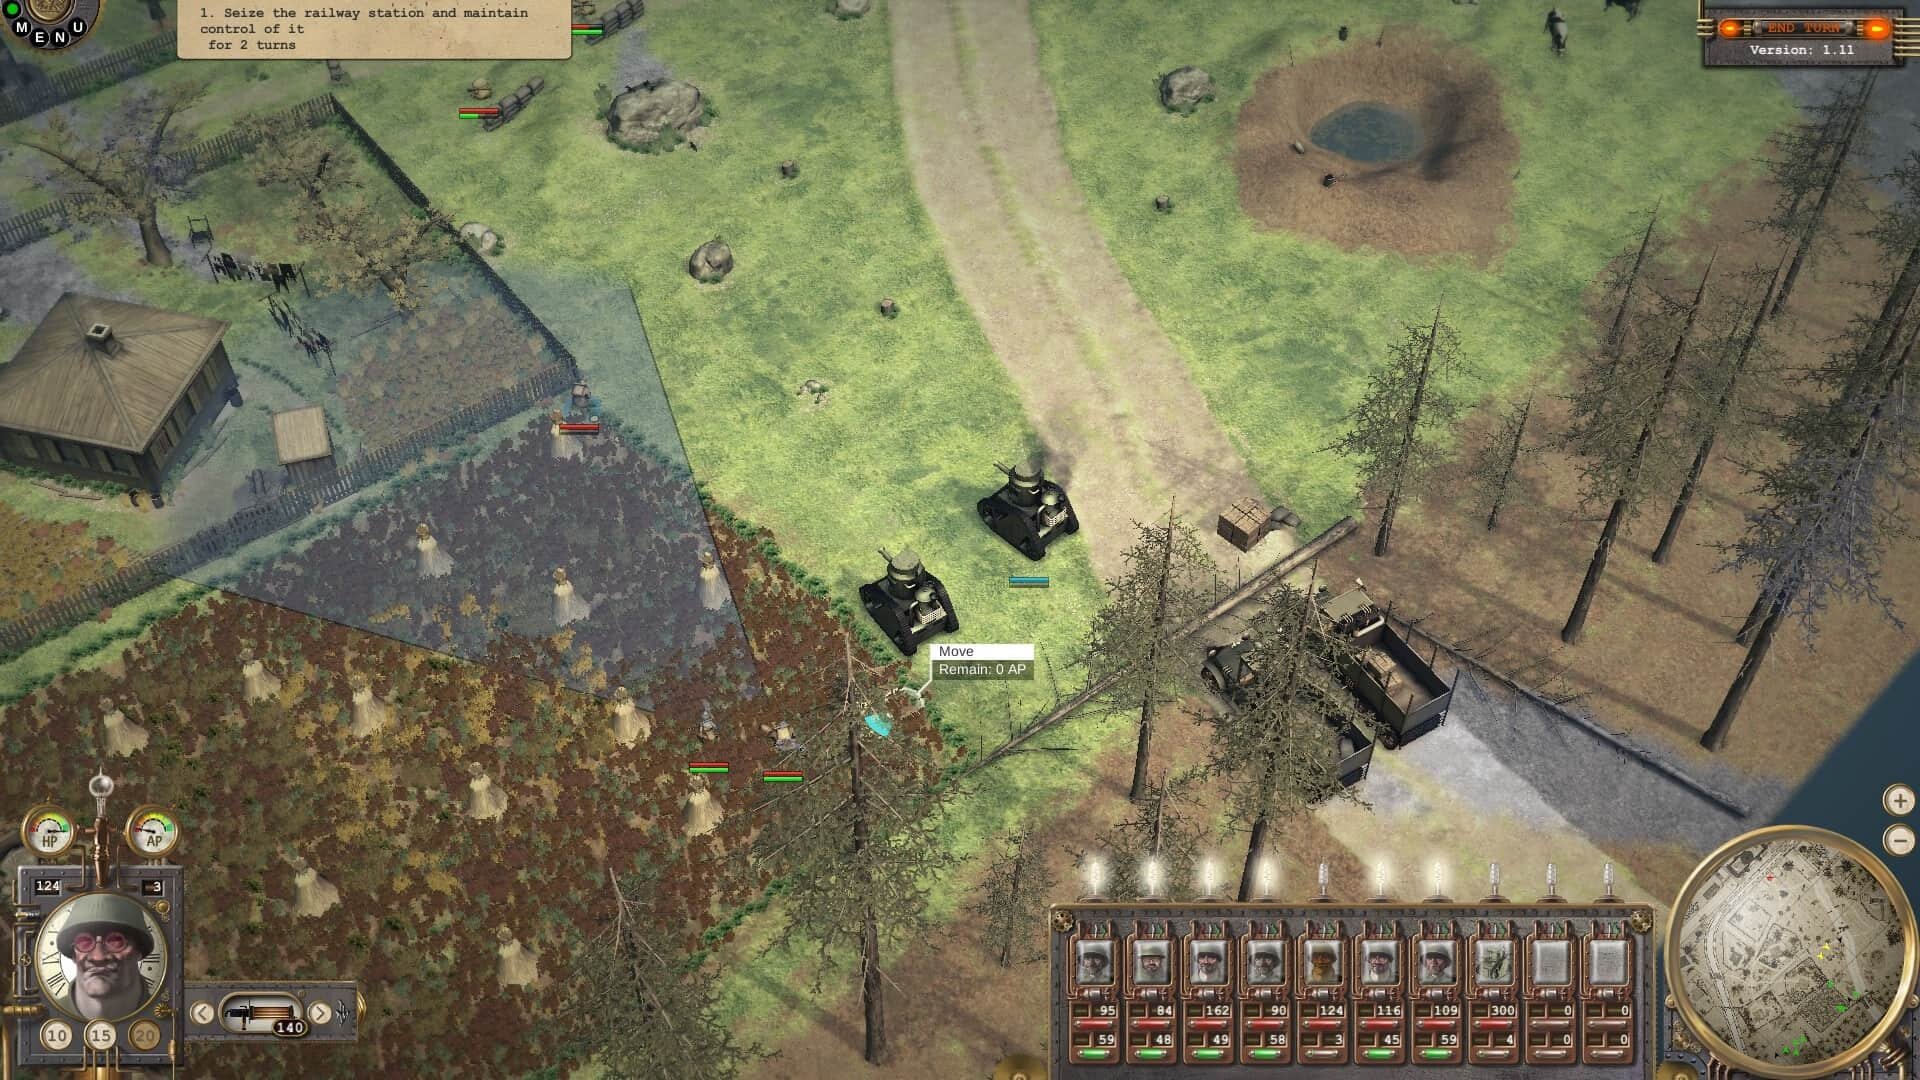 Steam Squad game screenshot, combat